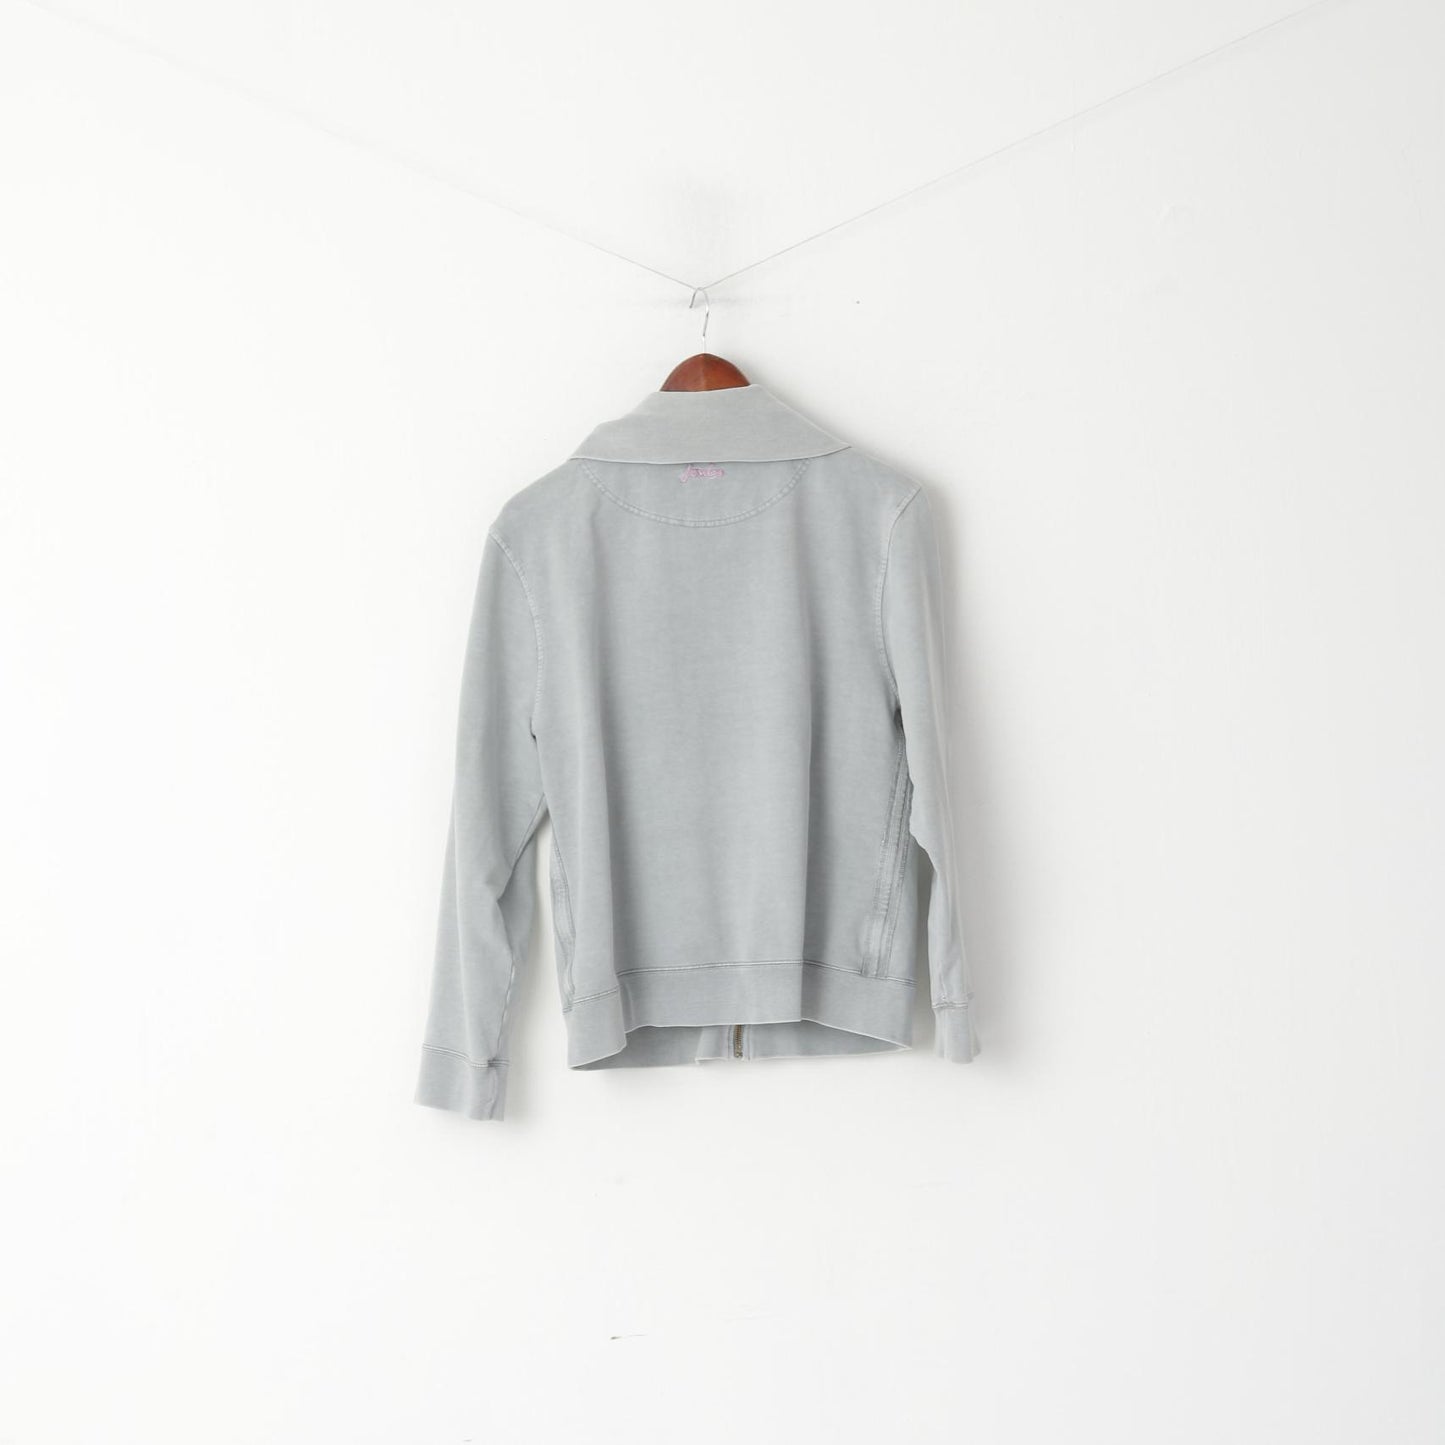 Joules Women 16 44 Sweatshirt Grey Cotton Faded Full Zipper #3 Casual Top